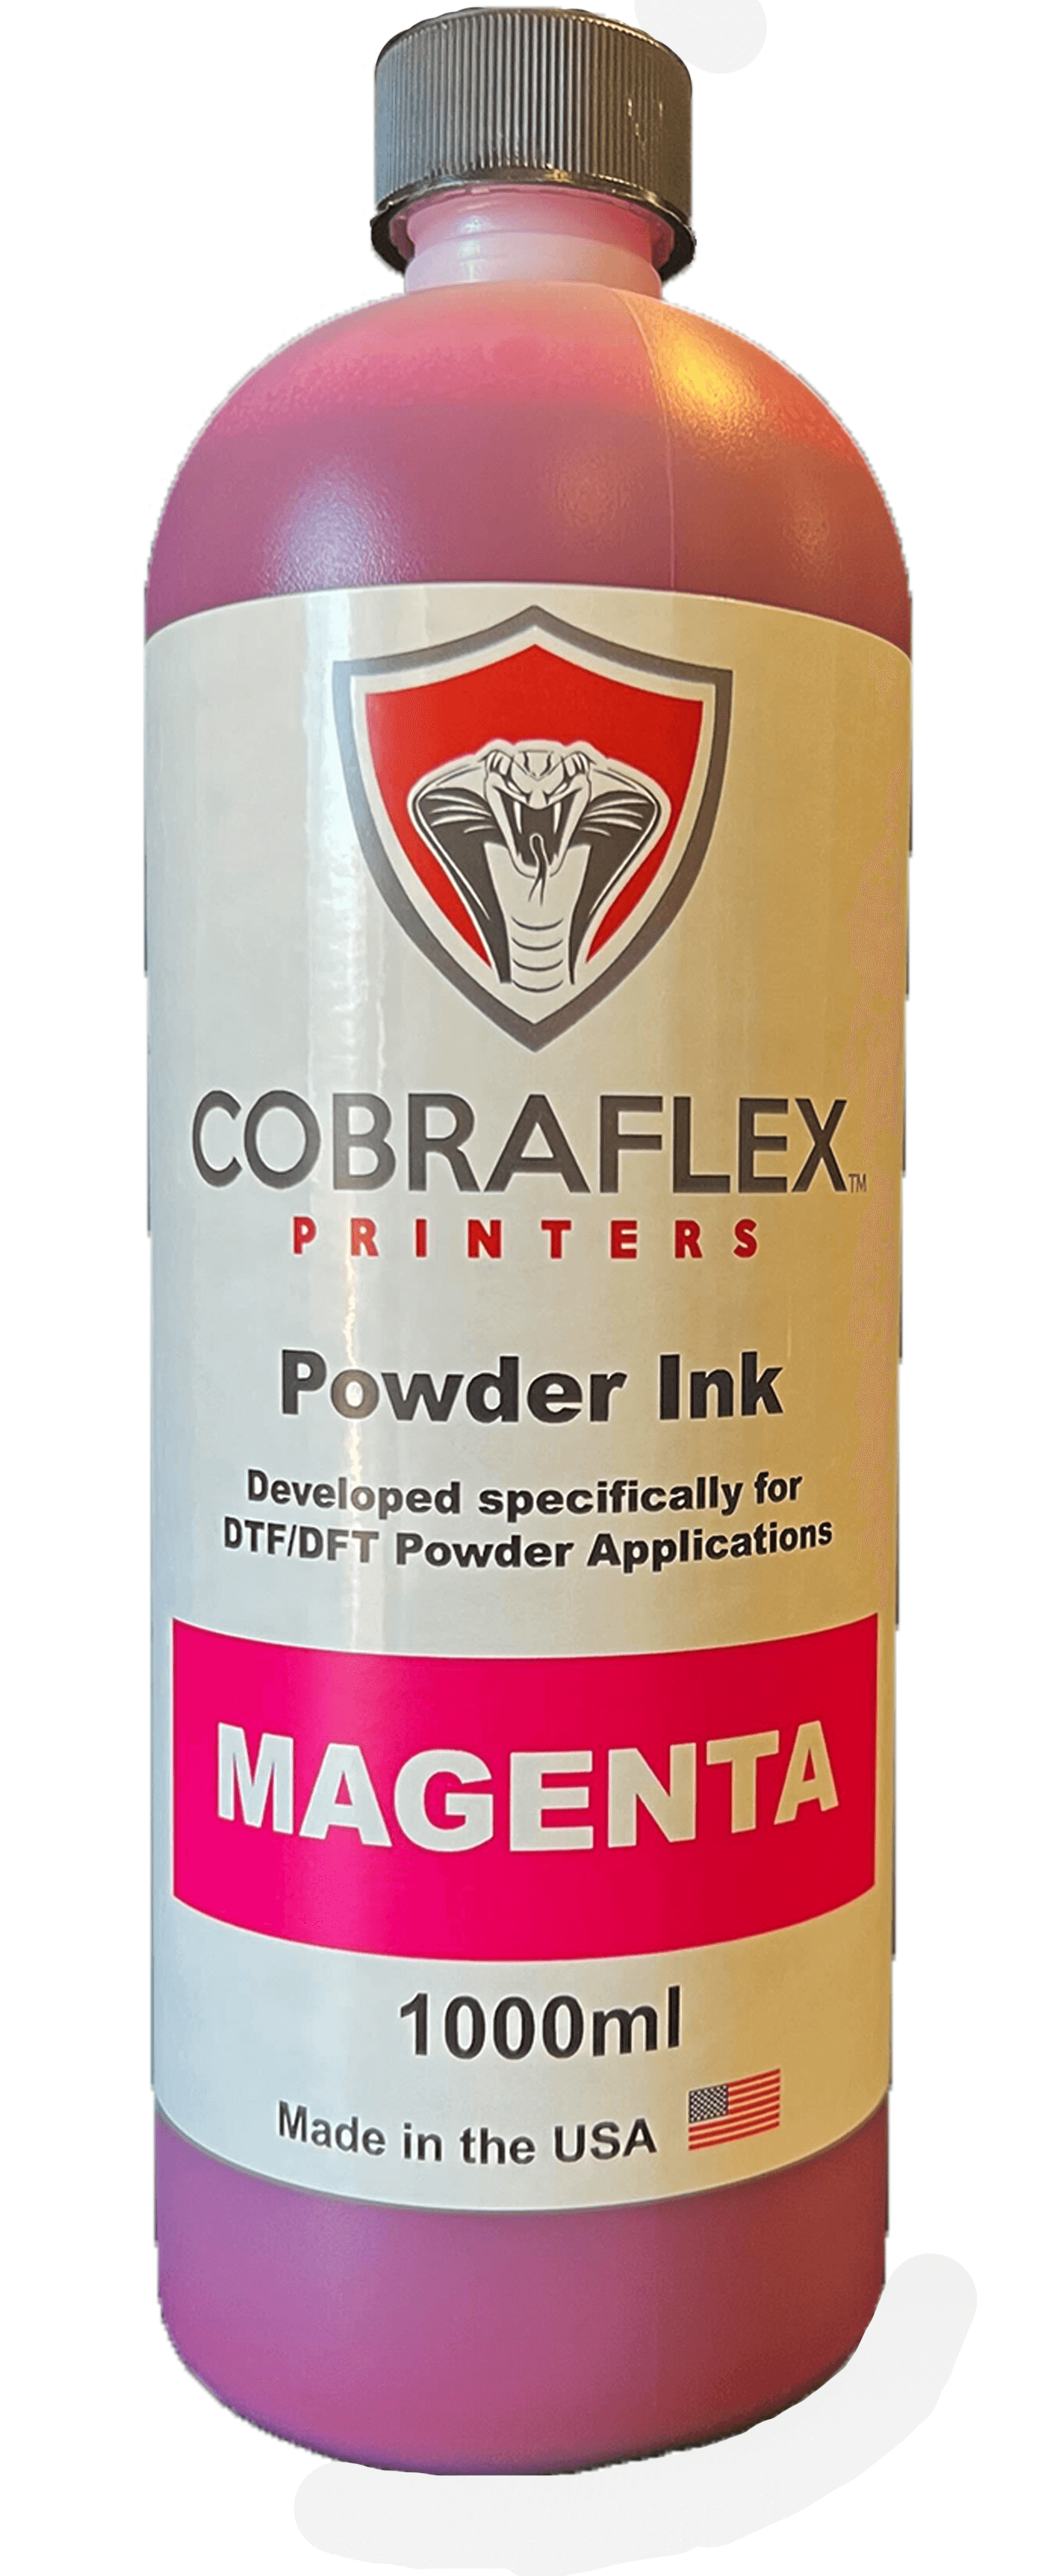 Cobraflex magenta powder ink